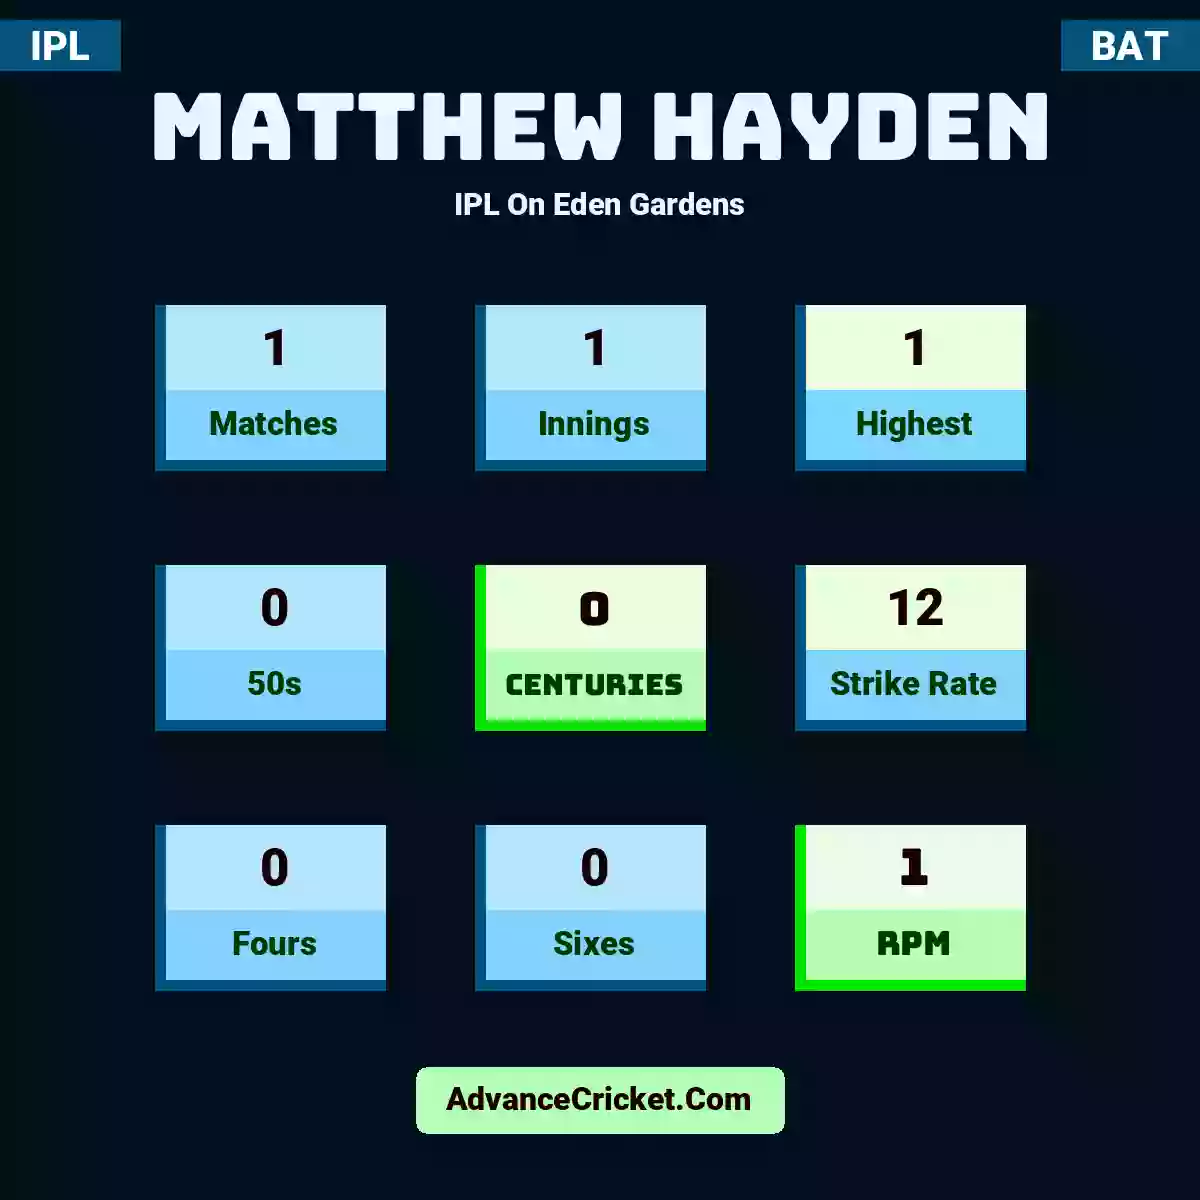 Matthew Hayden IPL  On Eden Gardens, Matthew Hayden played 1 matches, scored 1 runs as highest, 0 half-centuries, and 0 centuries, with a strike rate of 12. M.Hayden hit 0 fours and 0 sixes, with an RPM of 1.